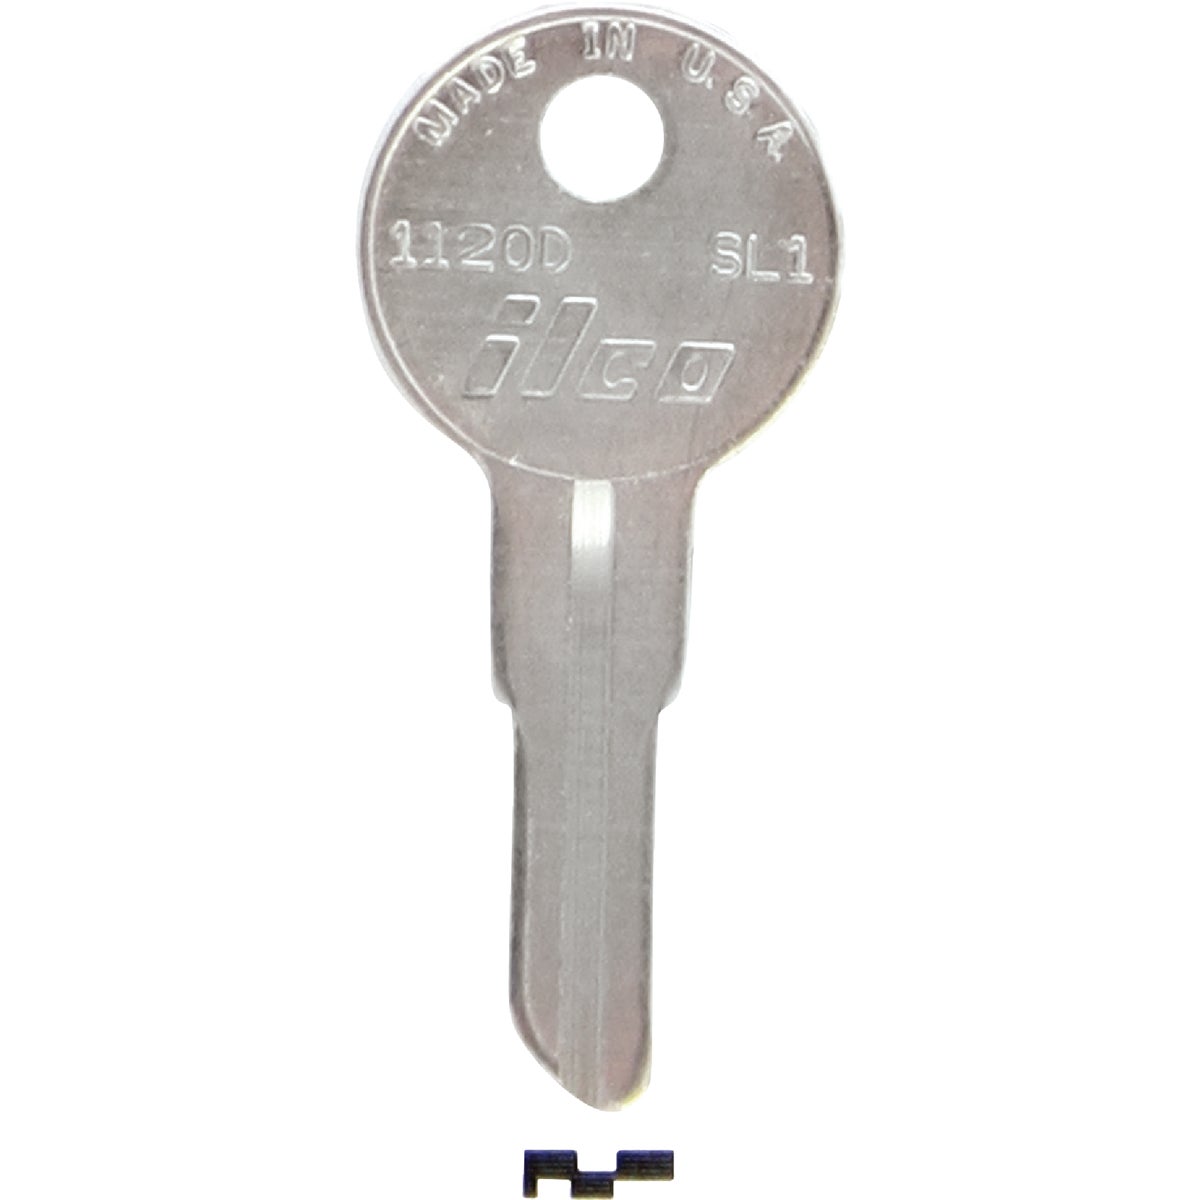 ILCO Slaymaker Nickel Plated Padlock Key SL1 / 1120D (10-Pack)